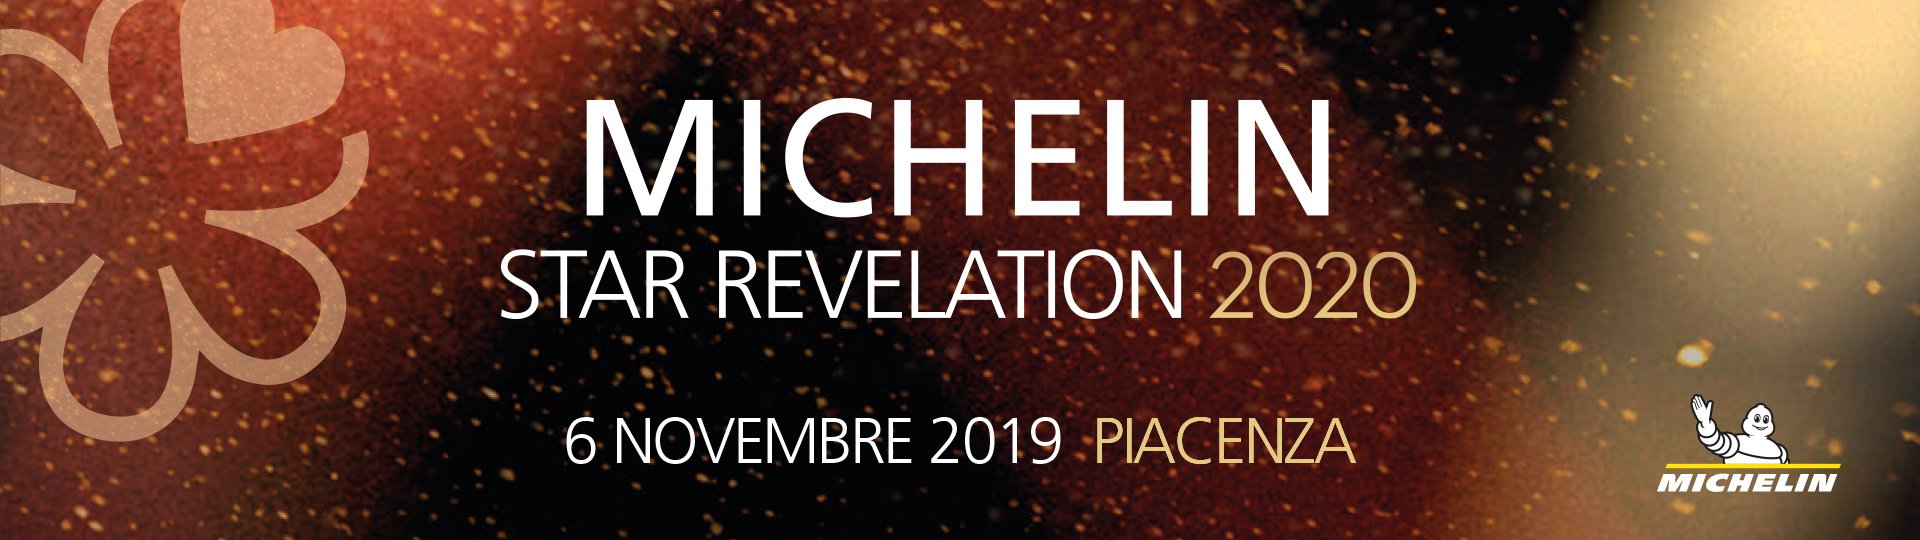 MICHELIN STAR REVELATION 2020